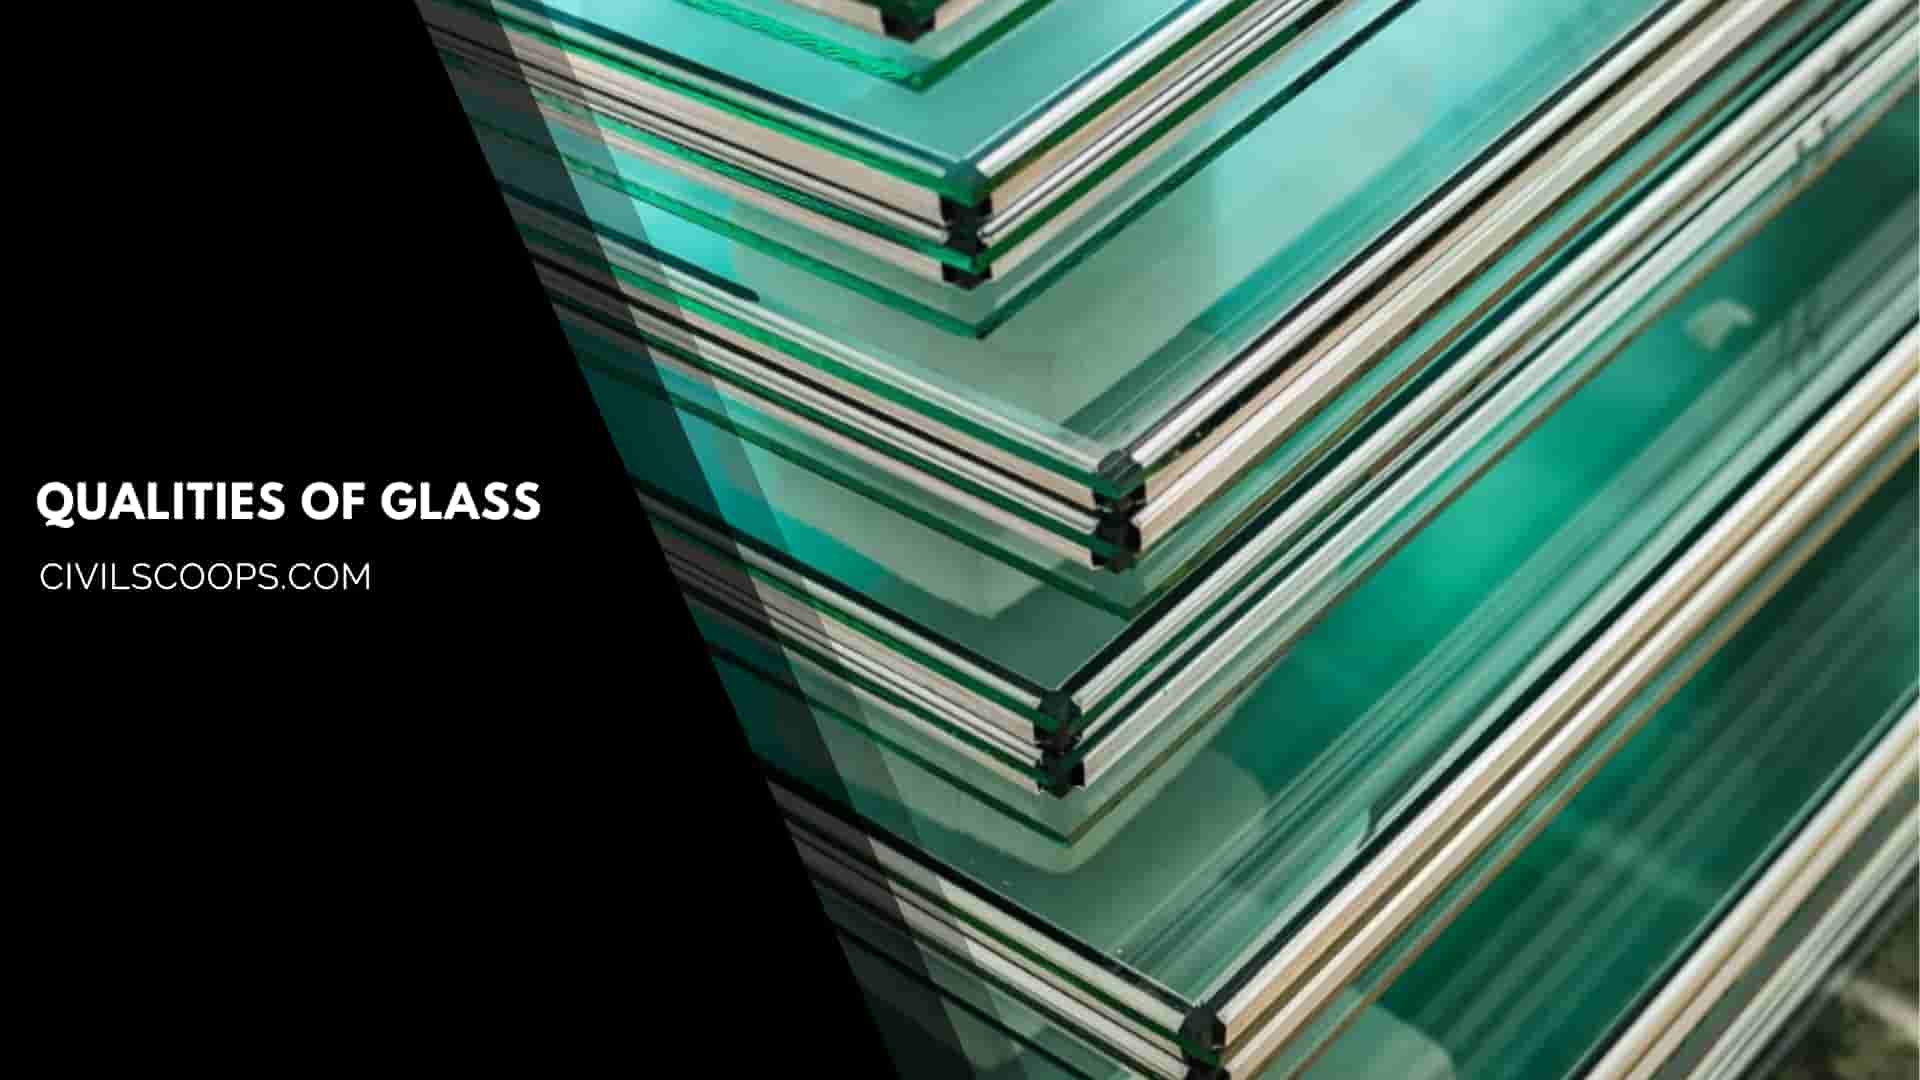 Qualities of Glass